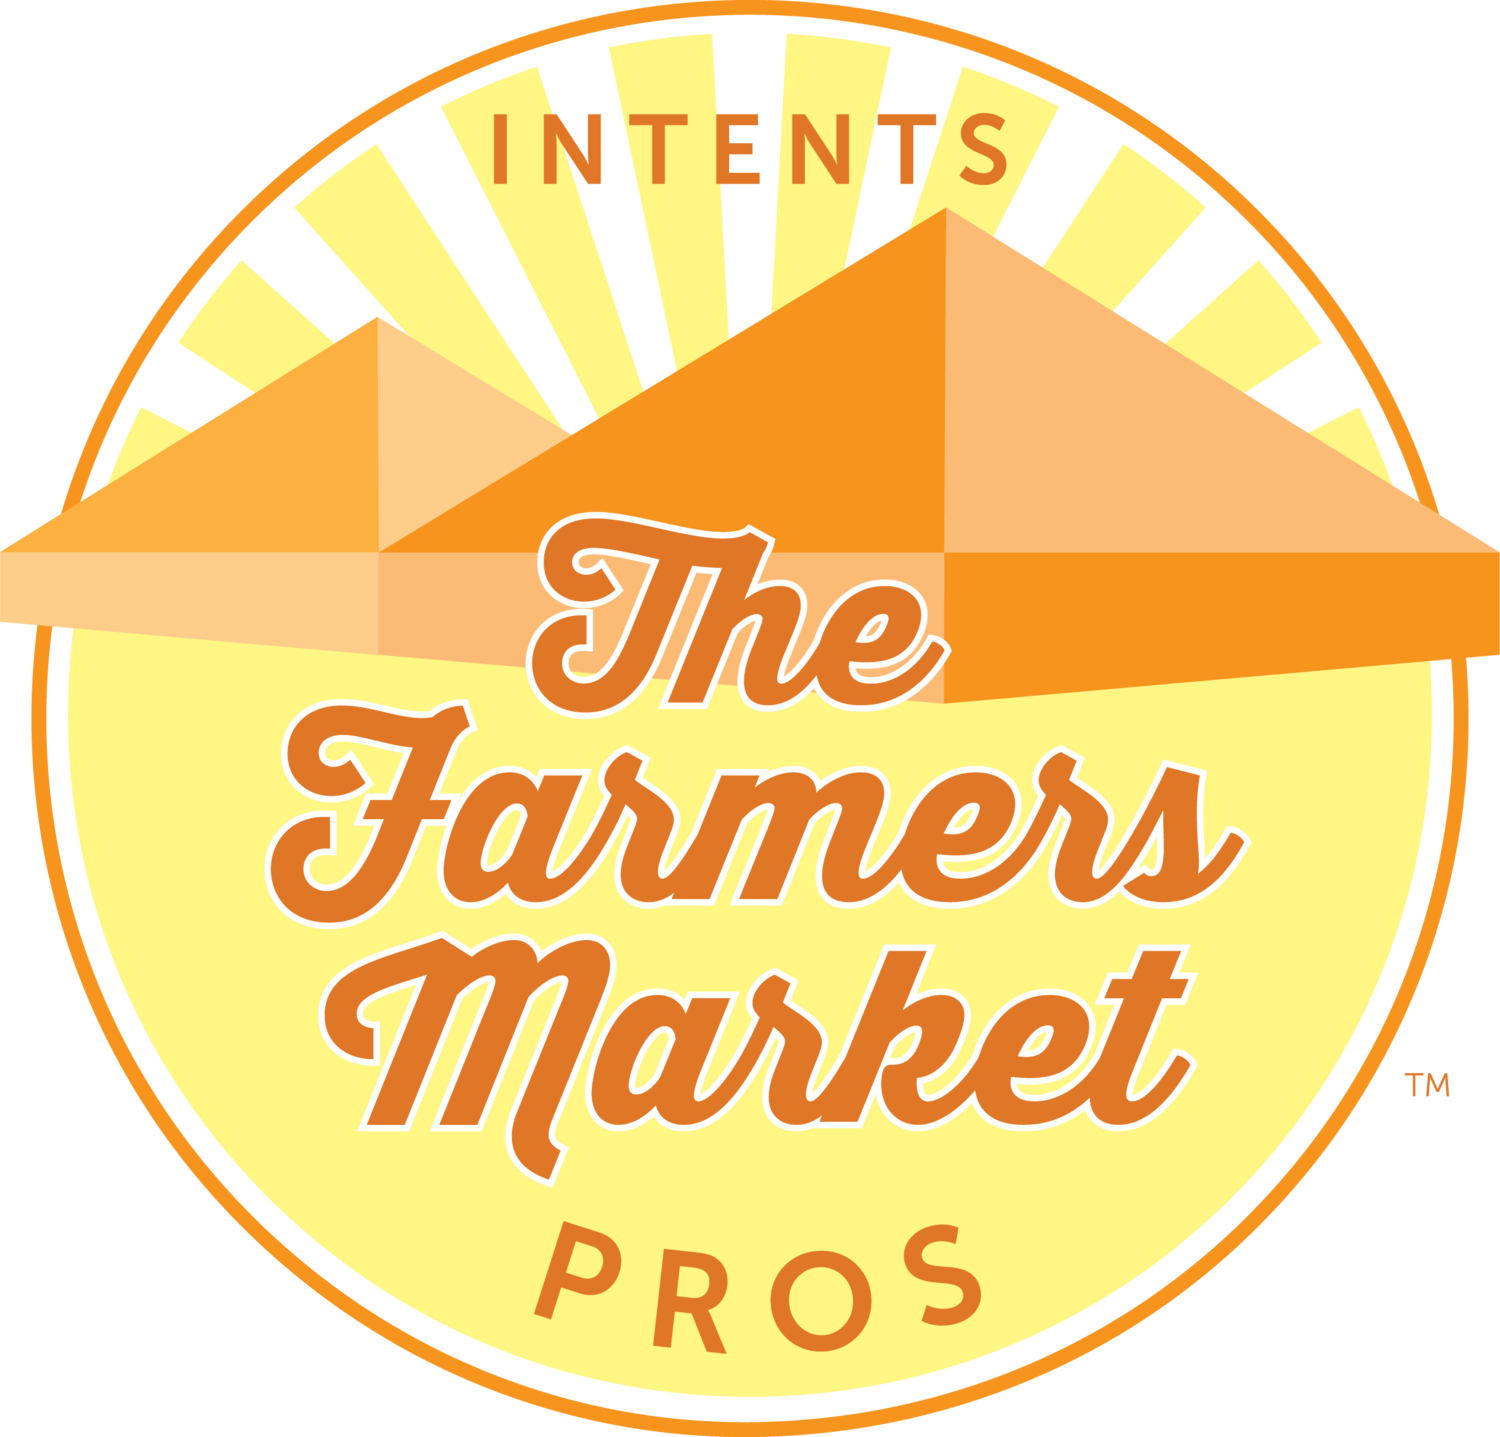 Farmers Market Pros